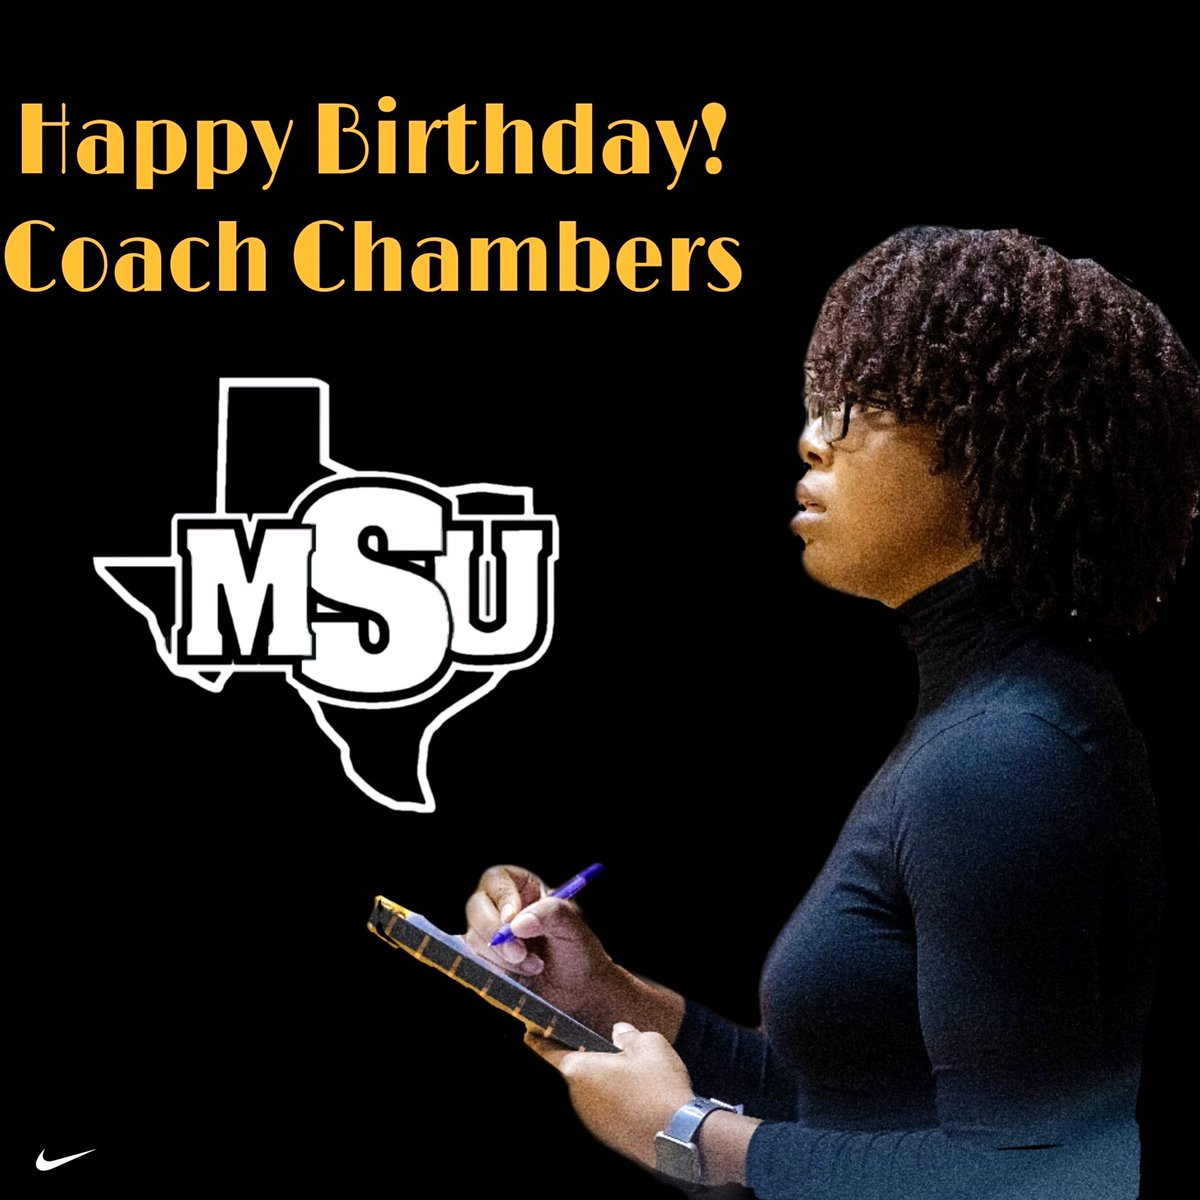 Everyone please help us wish Coach Chambers a VERY HAPPY BIRTHDAY! 🎉🎂 #stanggang